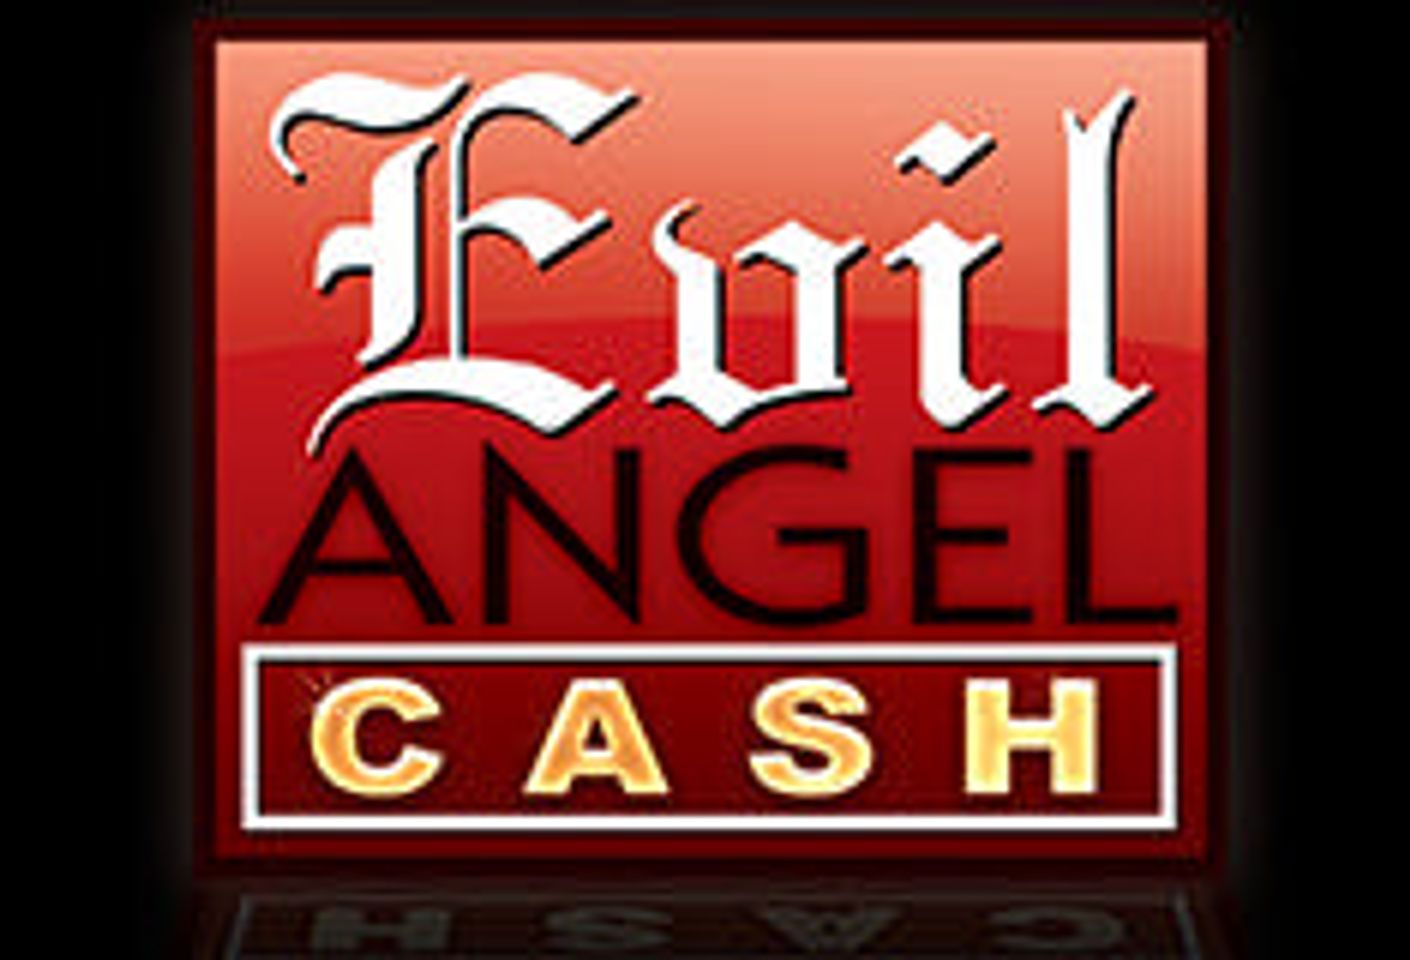 Evil Angel Cash: New Marketing Tools For Affiliates